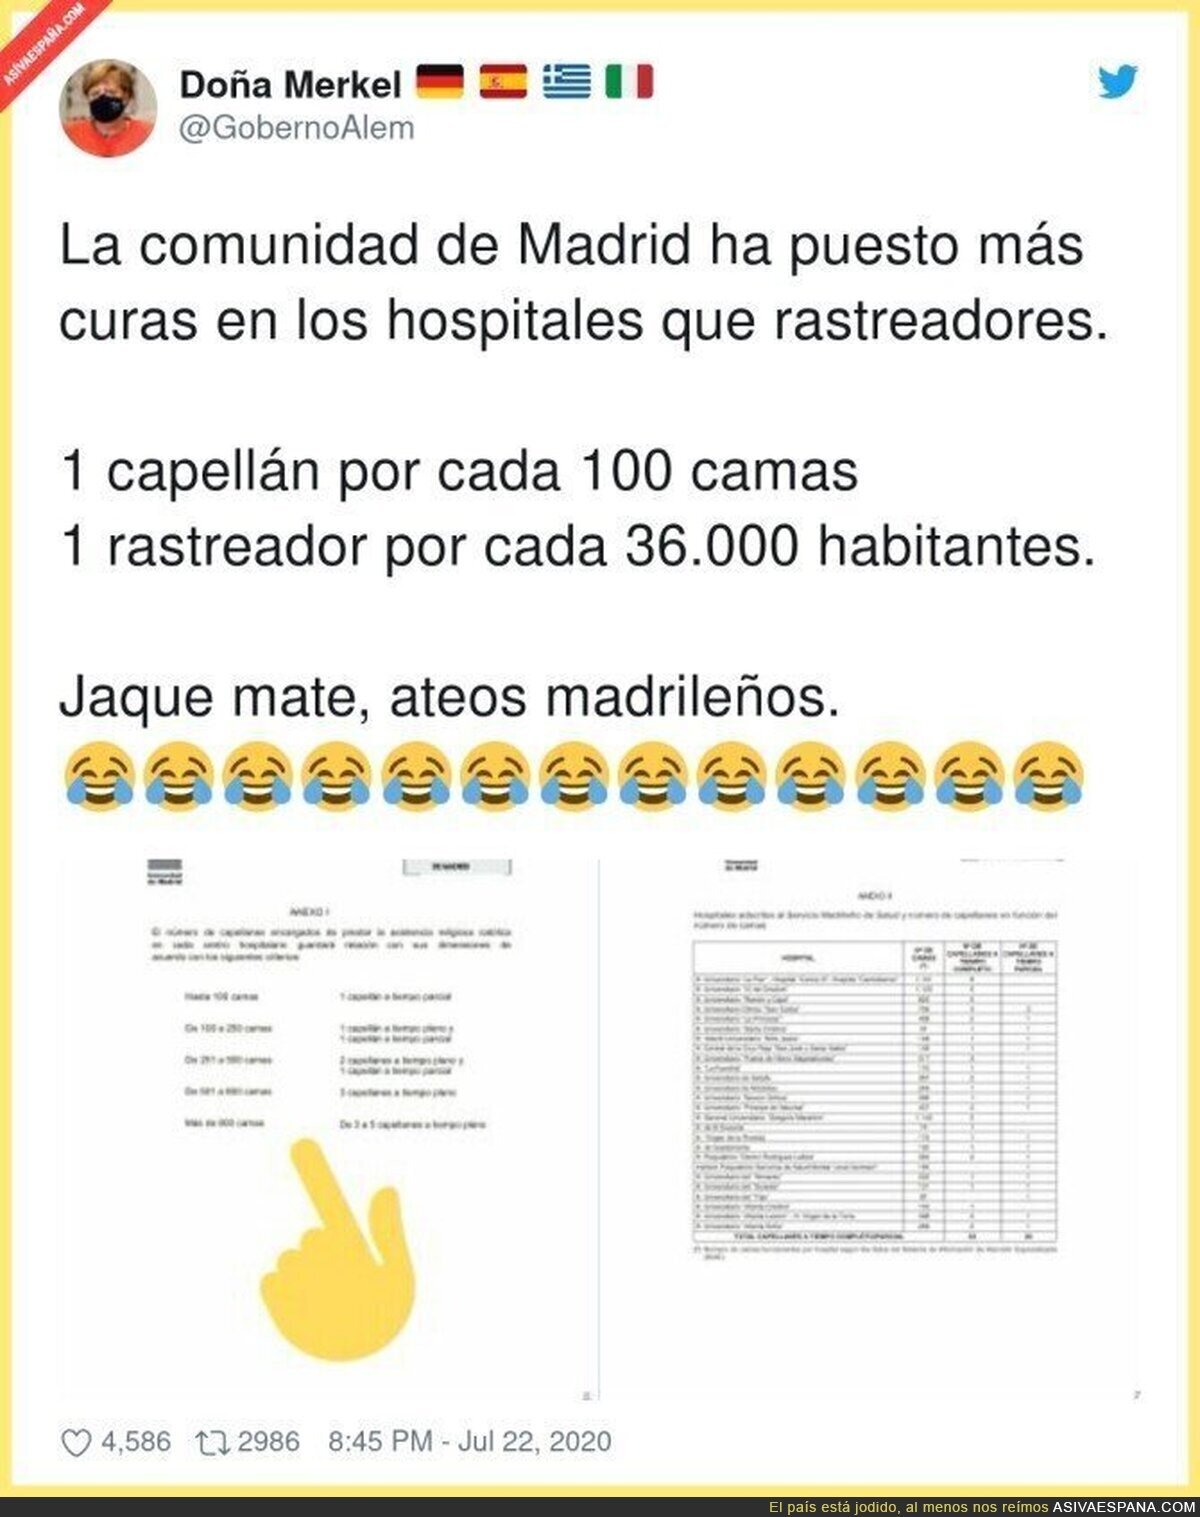 La presidenta de la Comunidad de Madrid da mucha vergüenza ajena